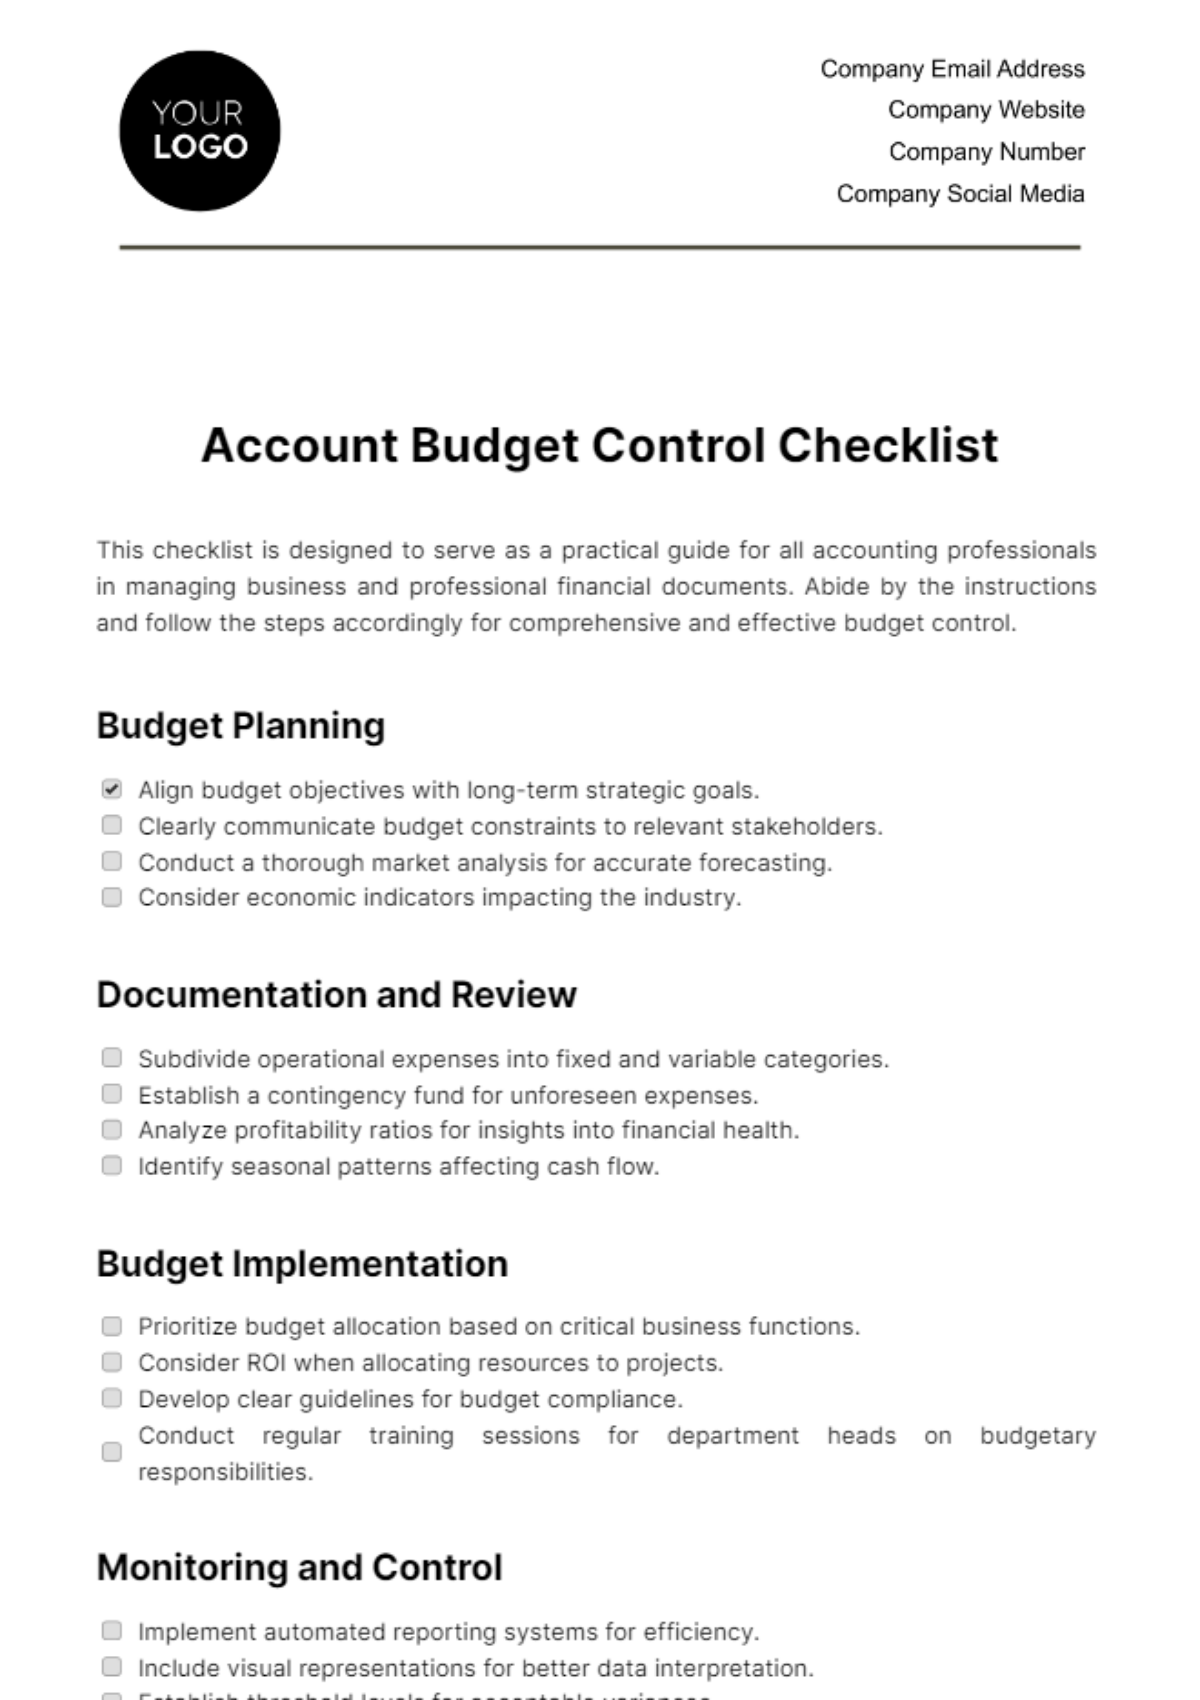 Account Budget Control Checklist Template